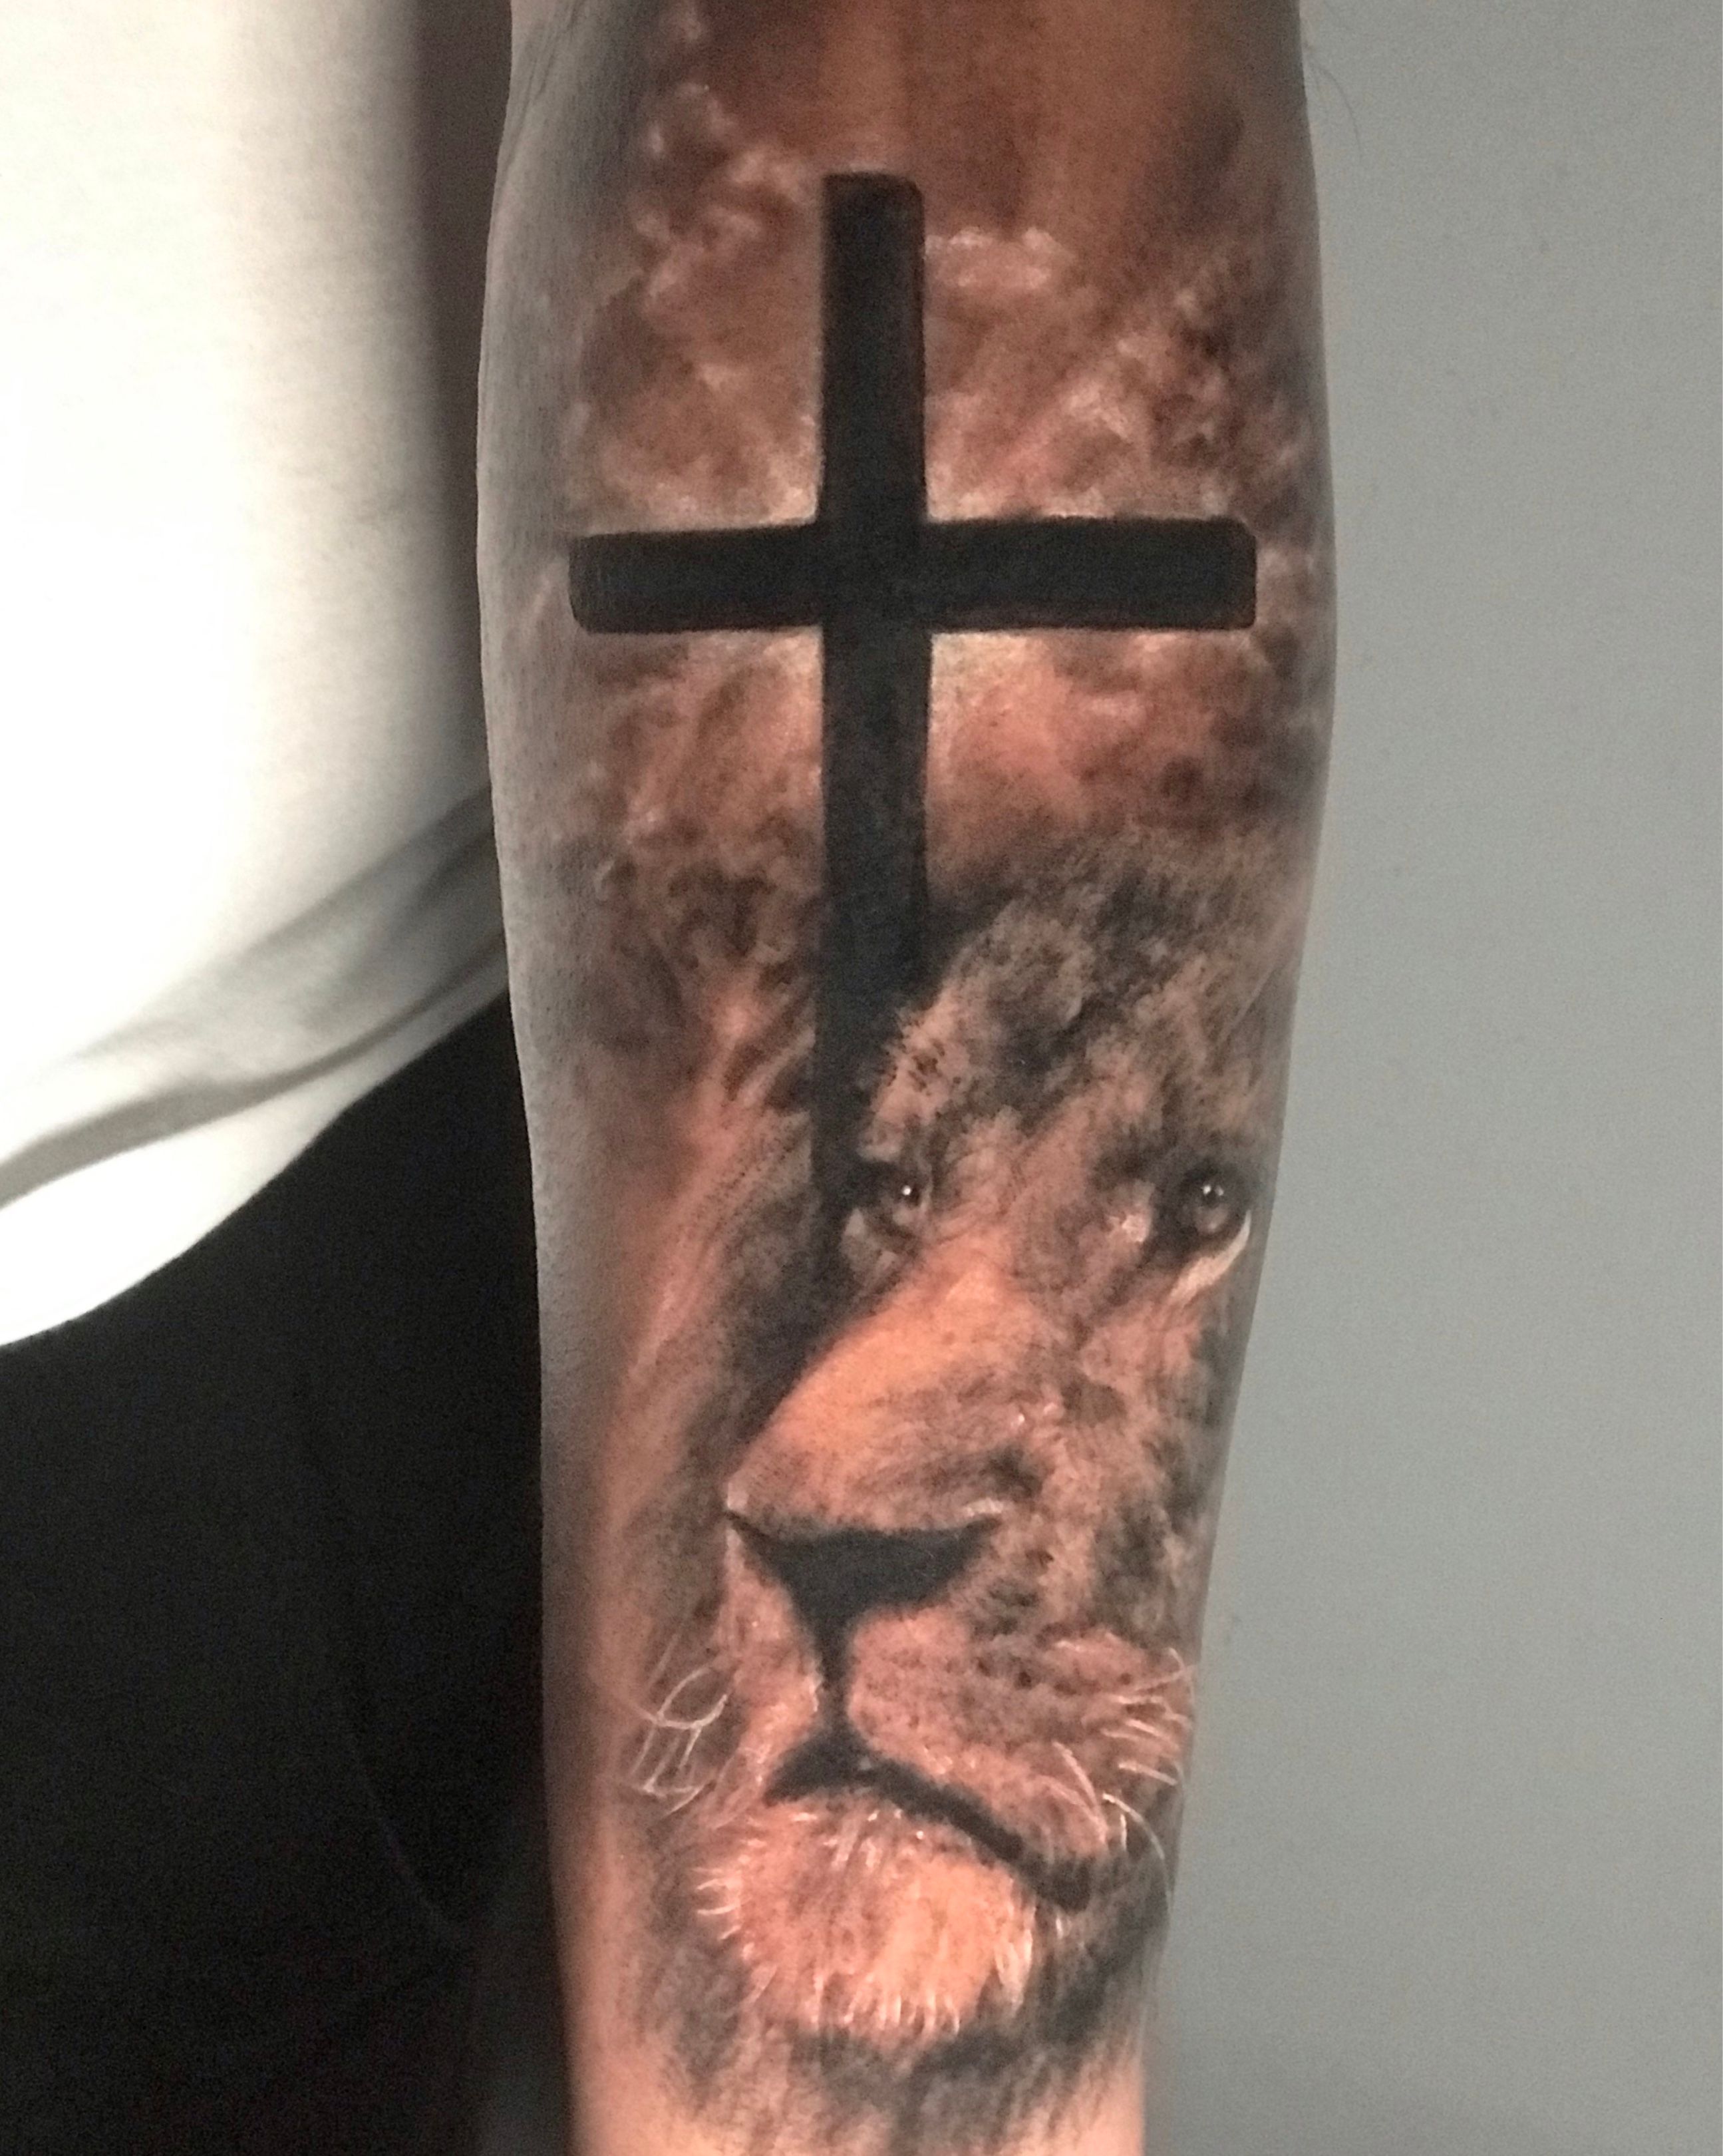 Capones Ink  CrossLion tattoo by Devin caponesink dmv baltimoretattoo  lion tattoo cross ink religion art kingofthejungle artist  Facebook